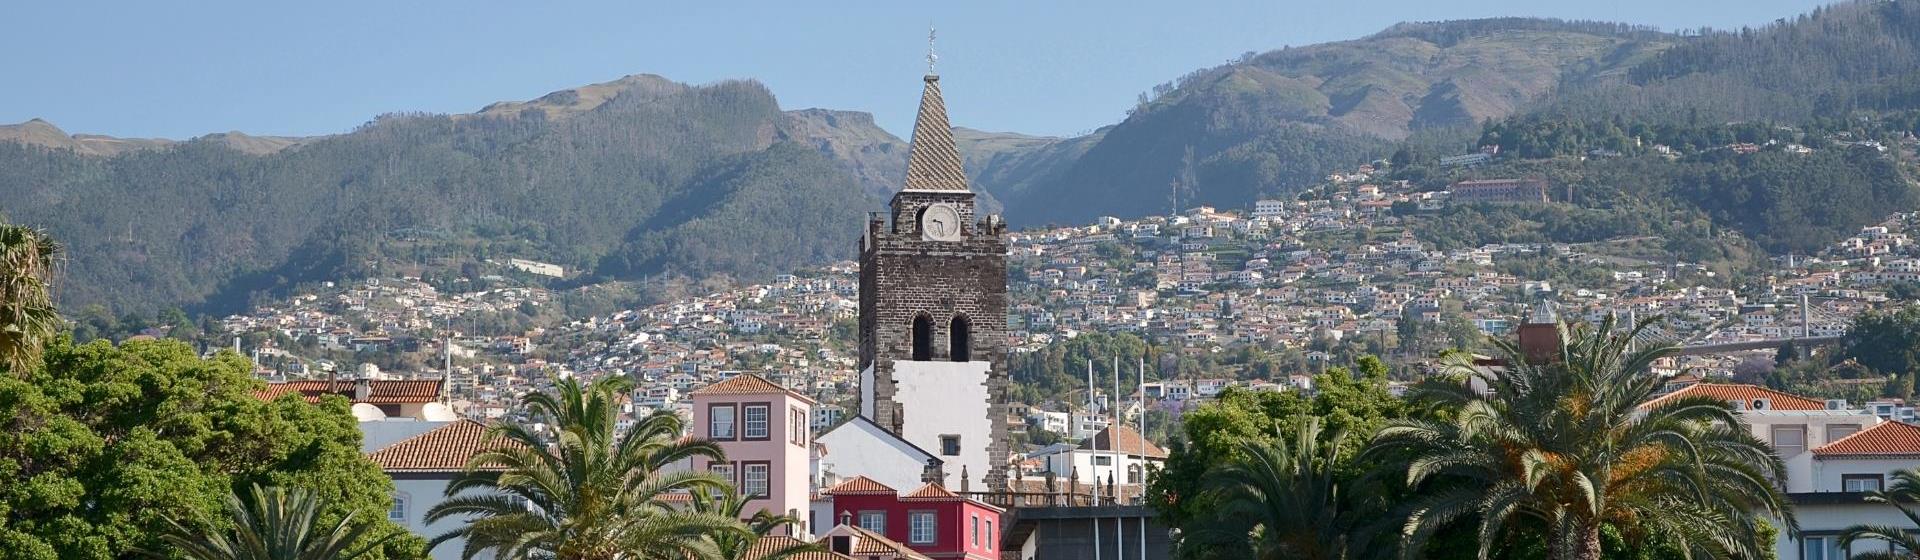 Holidays to Madeira